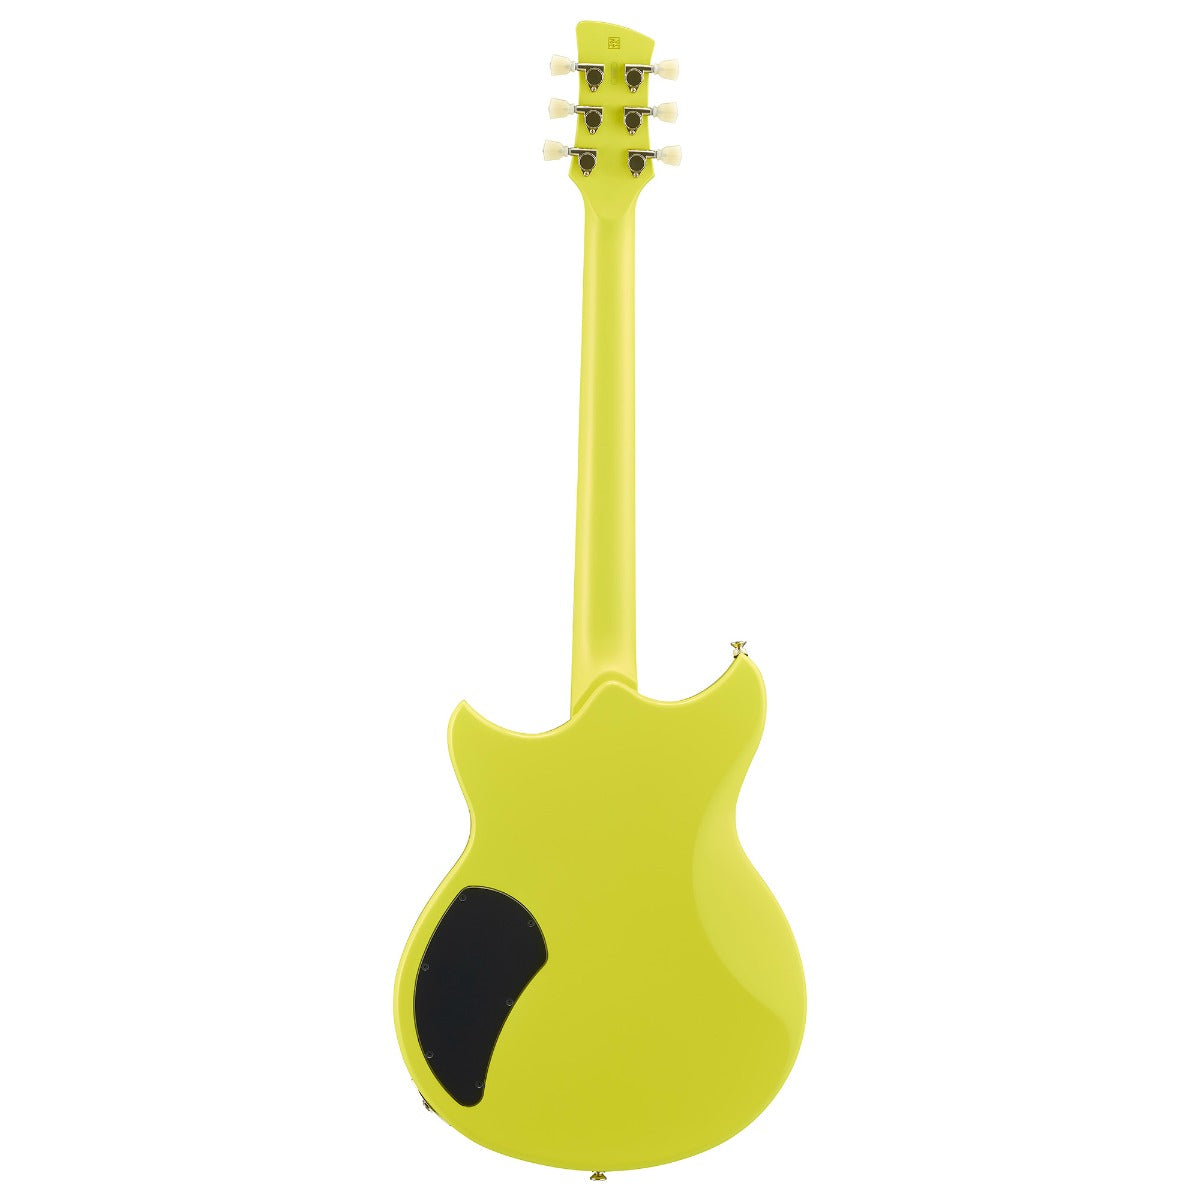 Yamaha RSE20 Revstar Element Electric Guitar - Neon Yellow, View 4